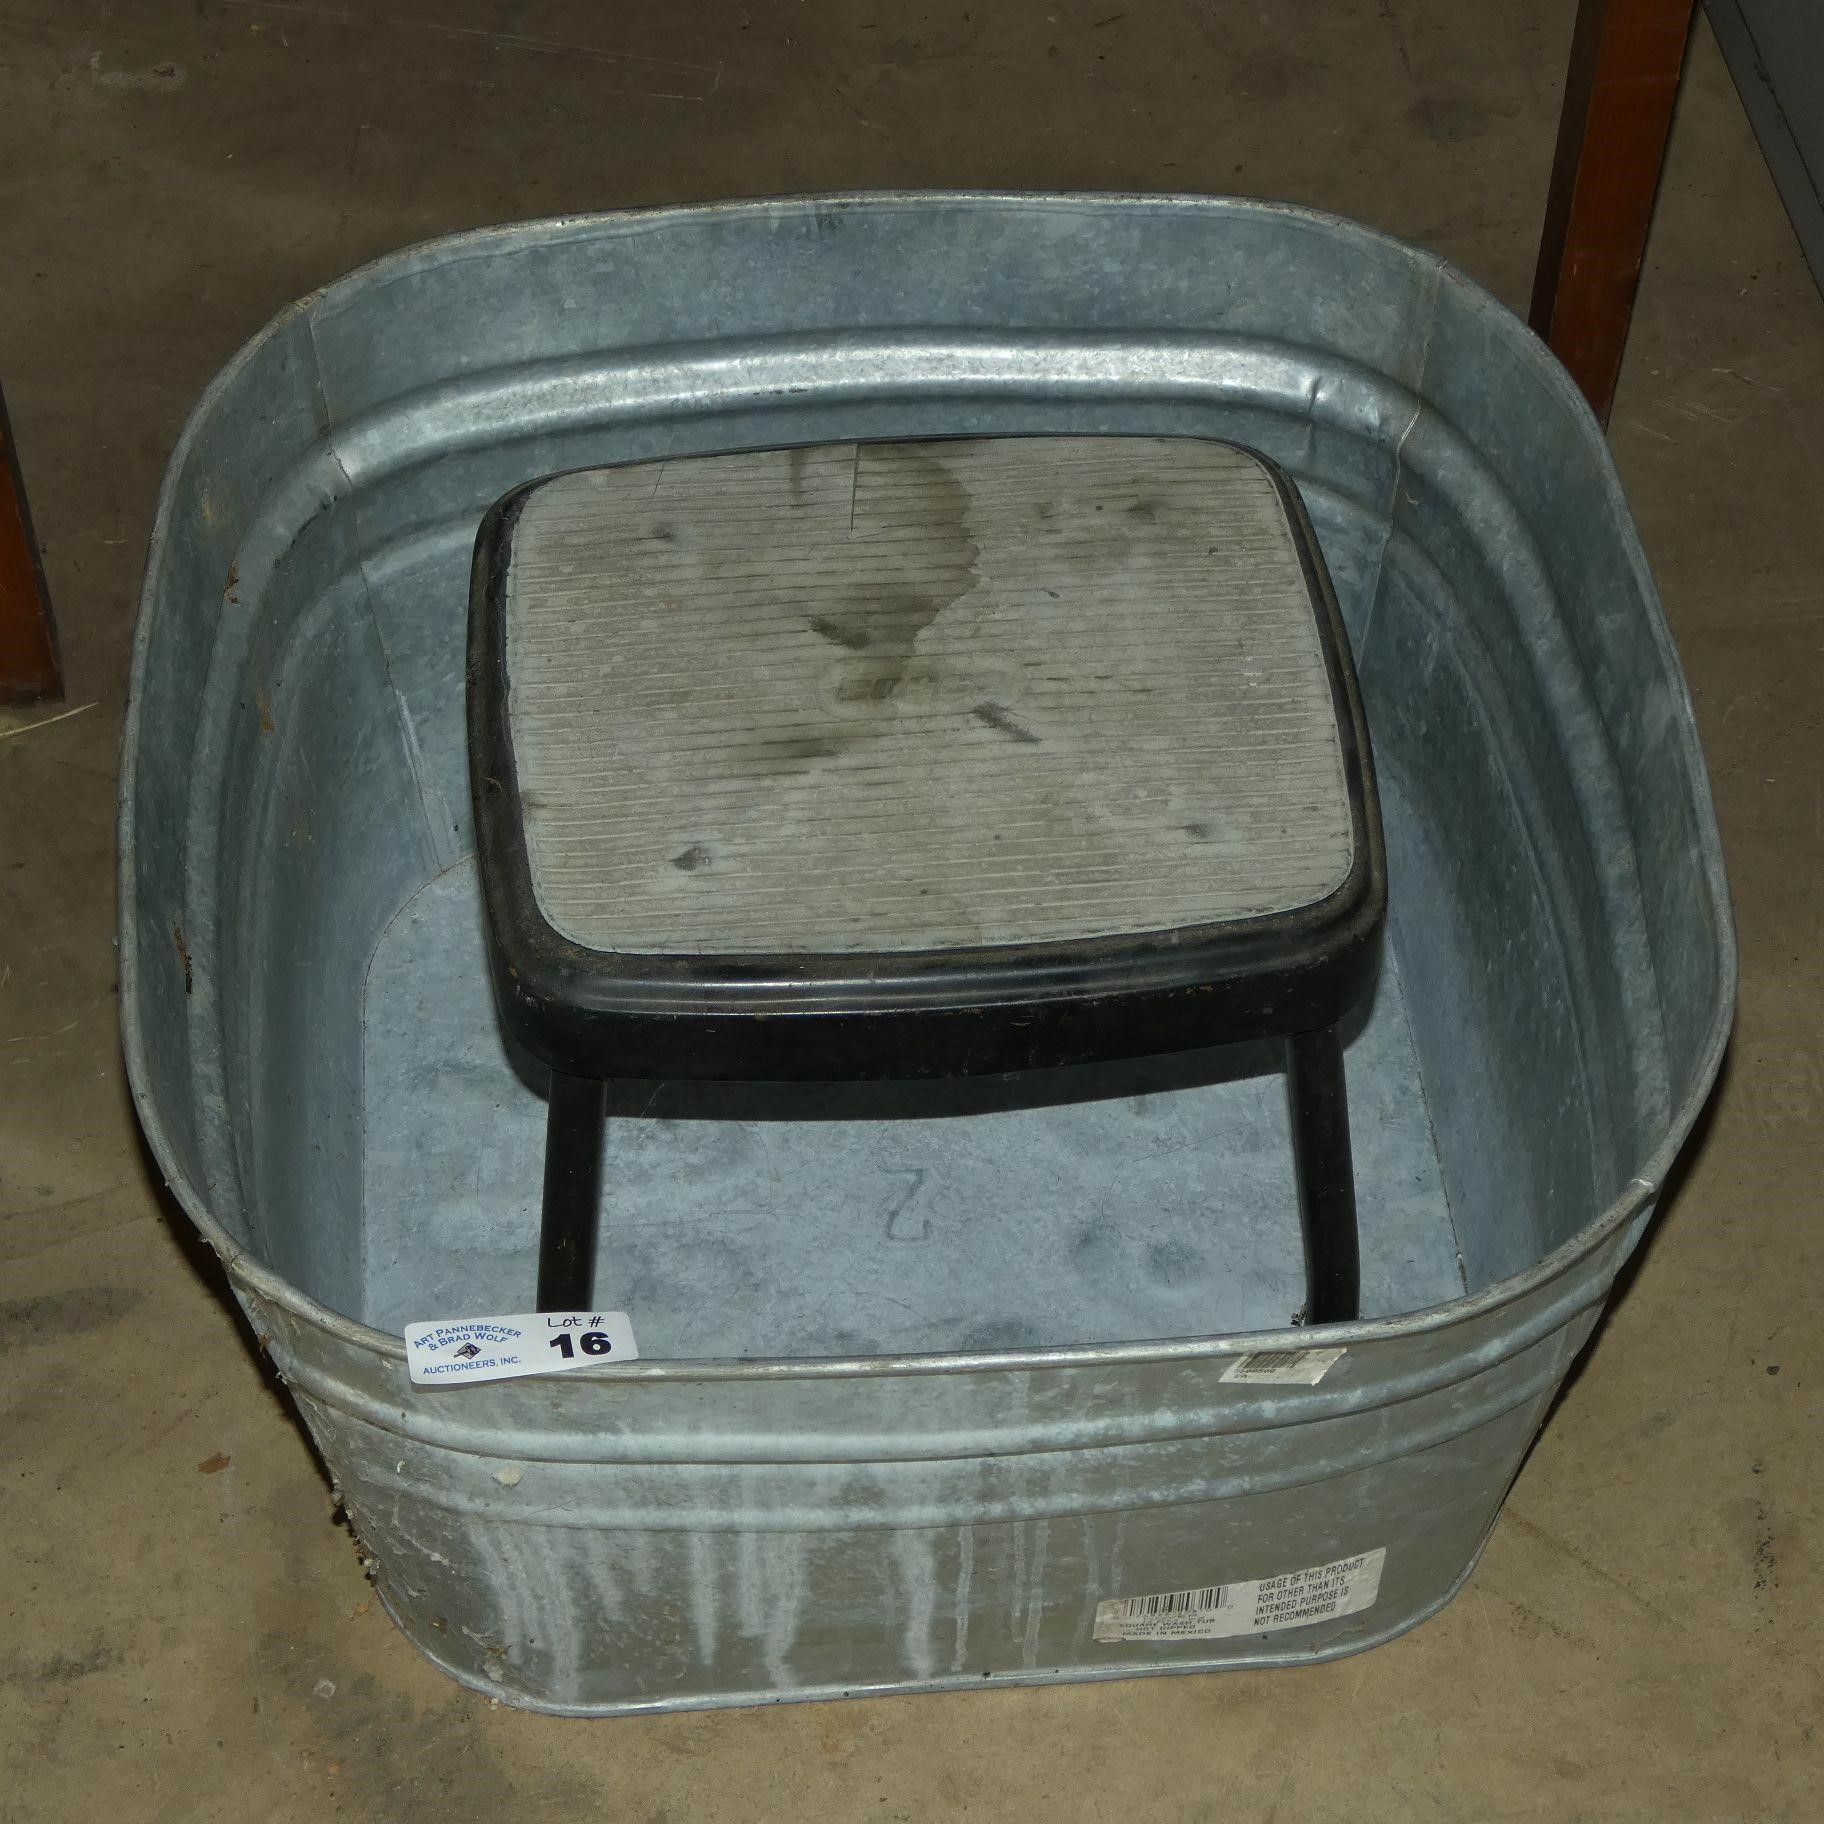 Galvanized Wash Tub & Step Stool